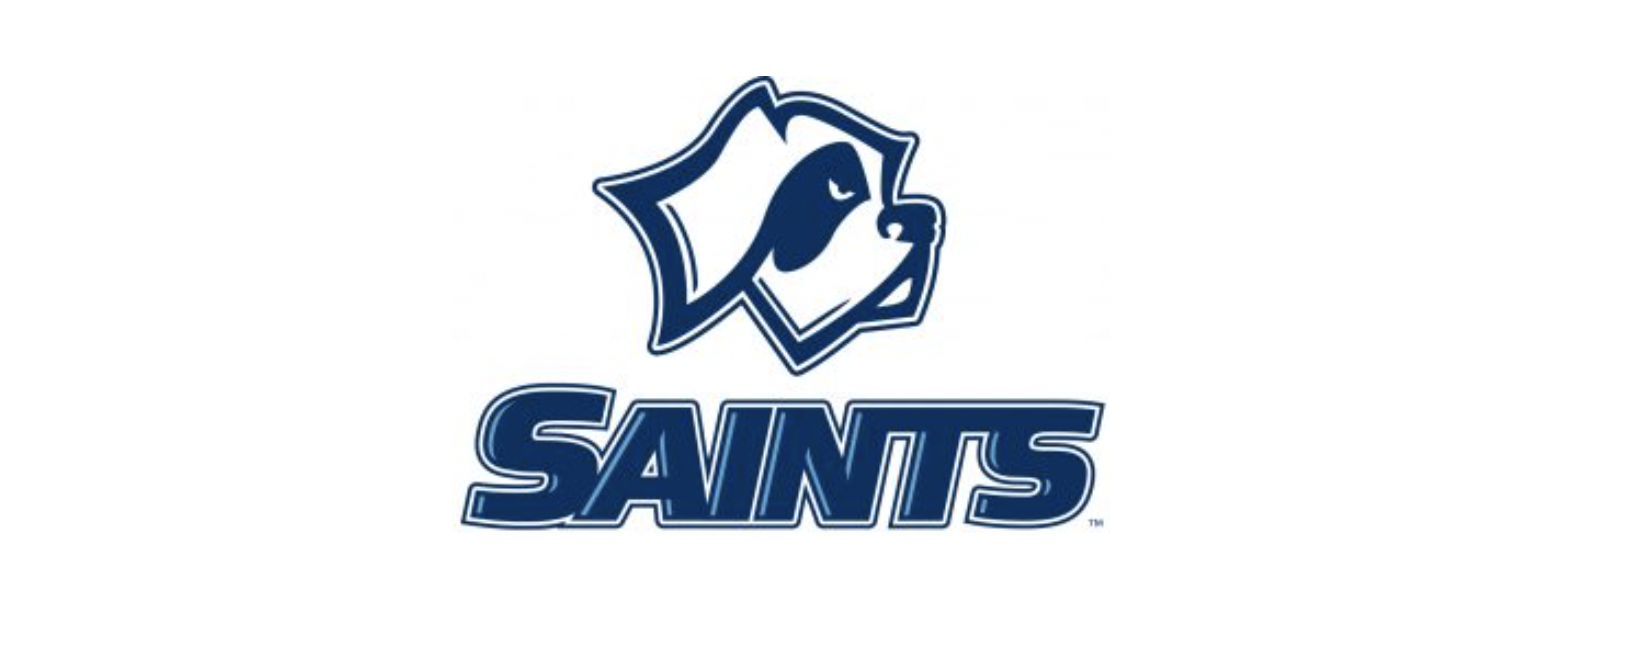 Caesar Saint logo for SF athletics